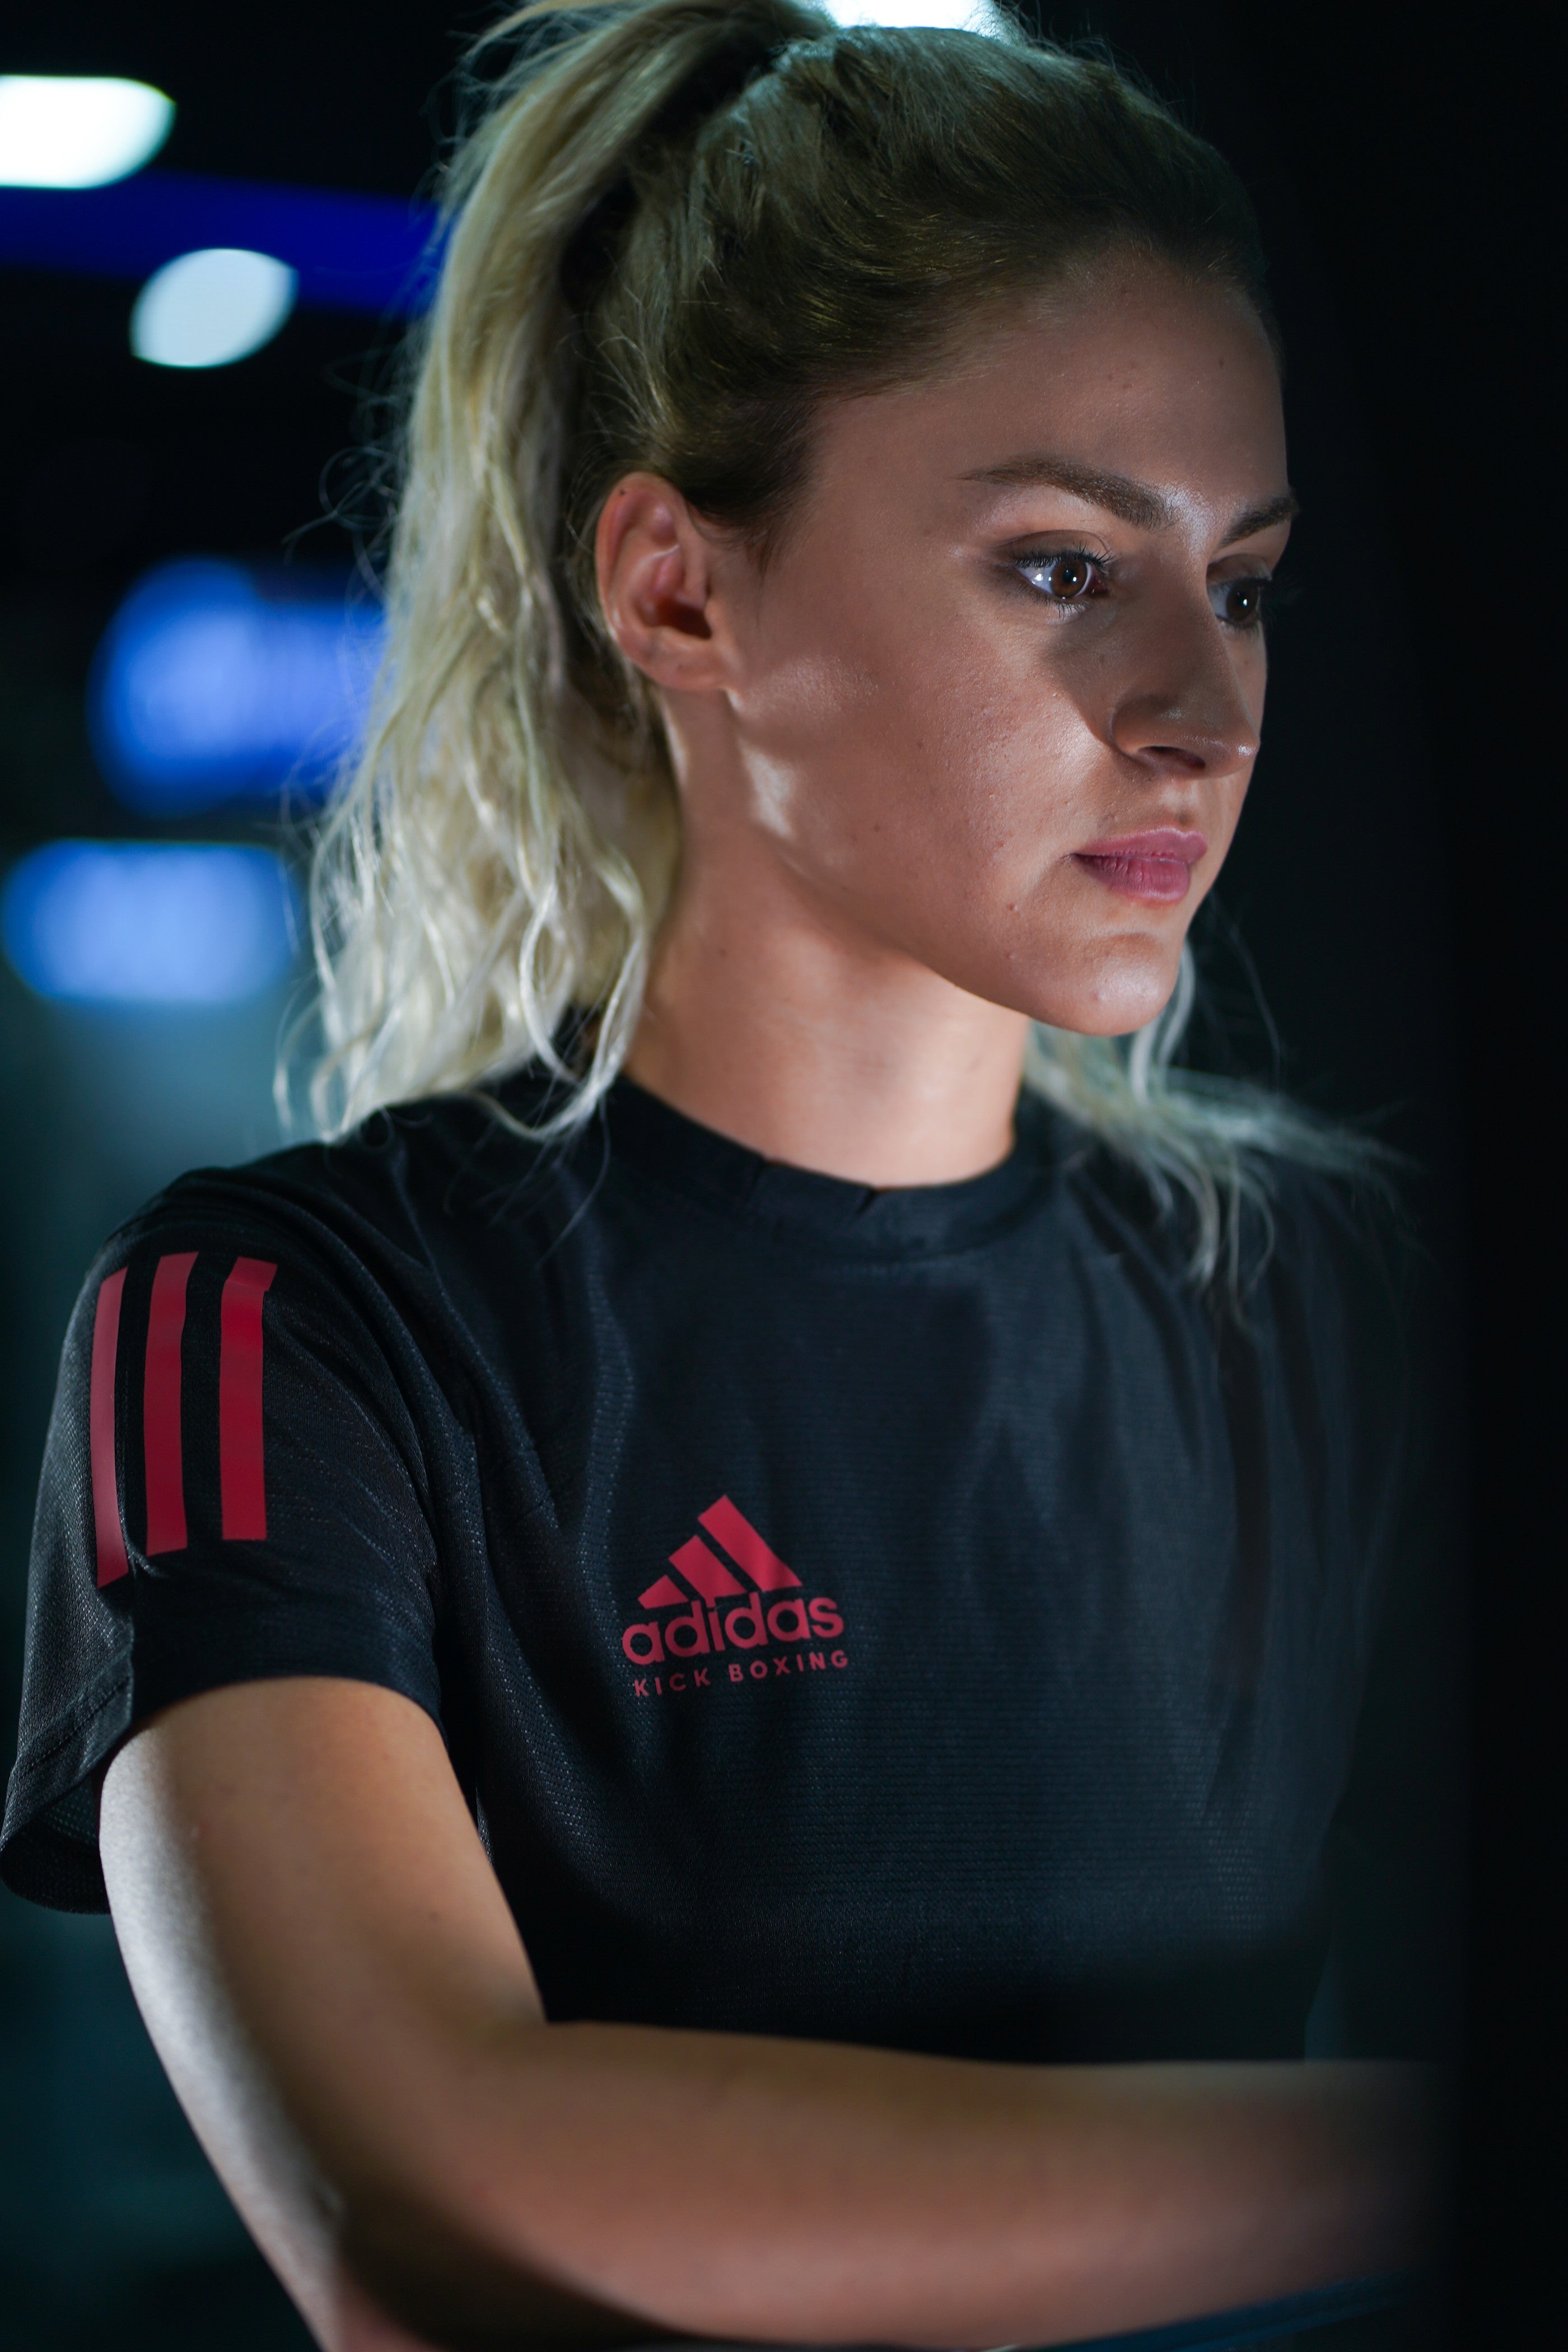 close-up-side-angle-blonde-girl-adidas-kickboxing-tshirt-red-logo